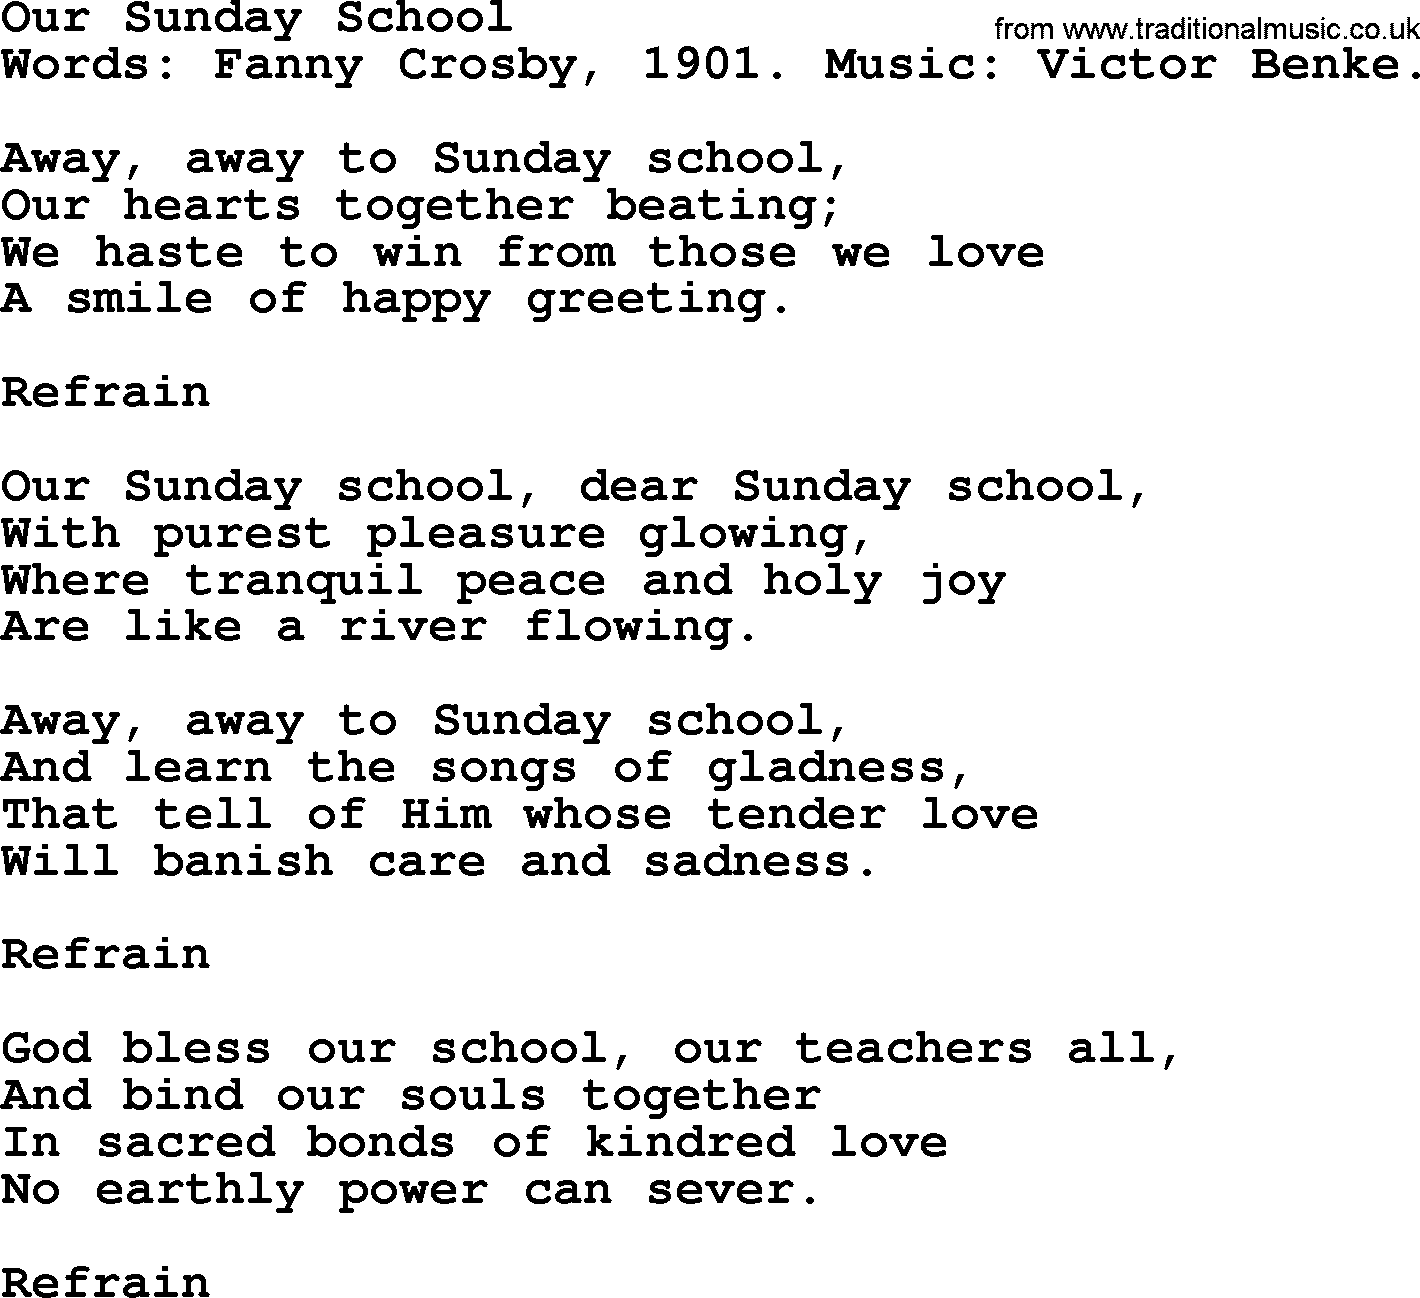 Fanny Crosby song: Our Sunday School, lyrics